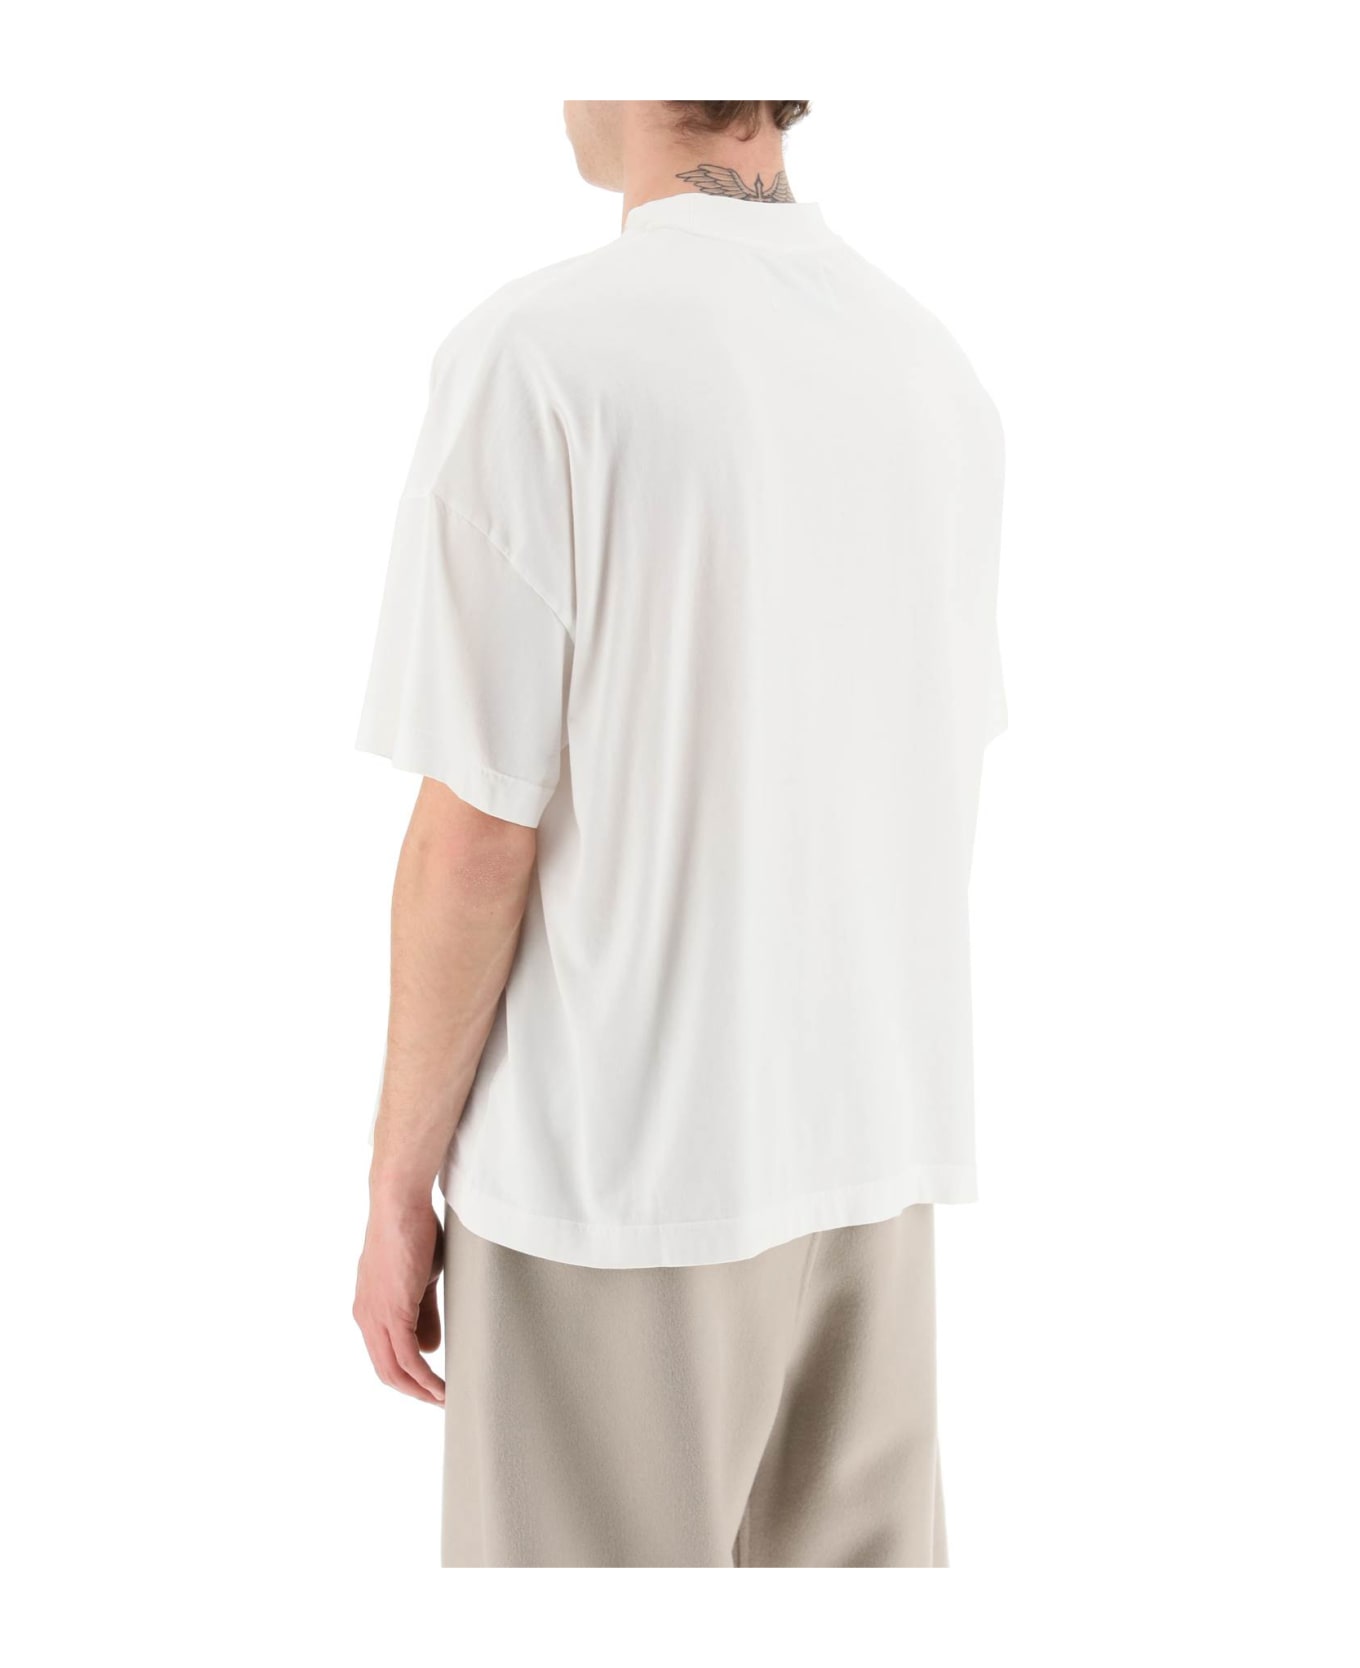 Bonsai Printed Maxi T-shirt - WHITE (White)